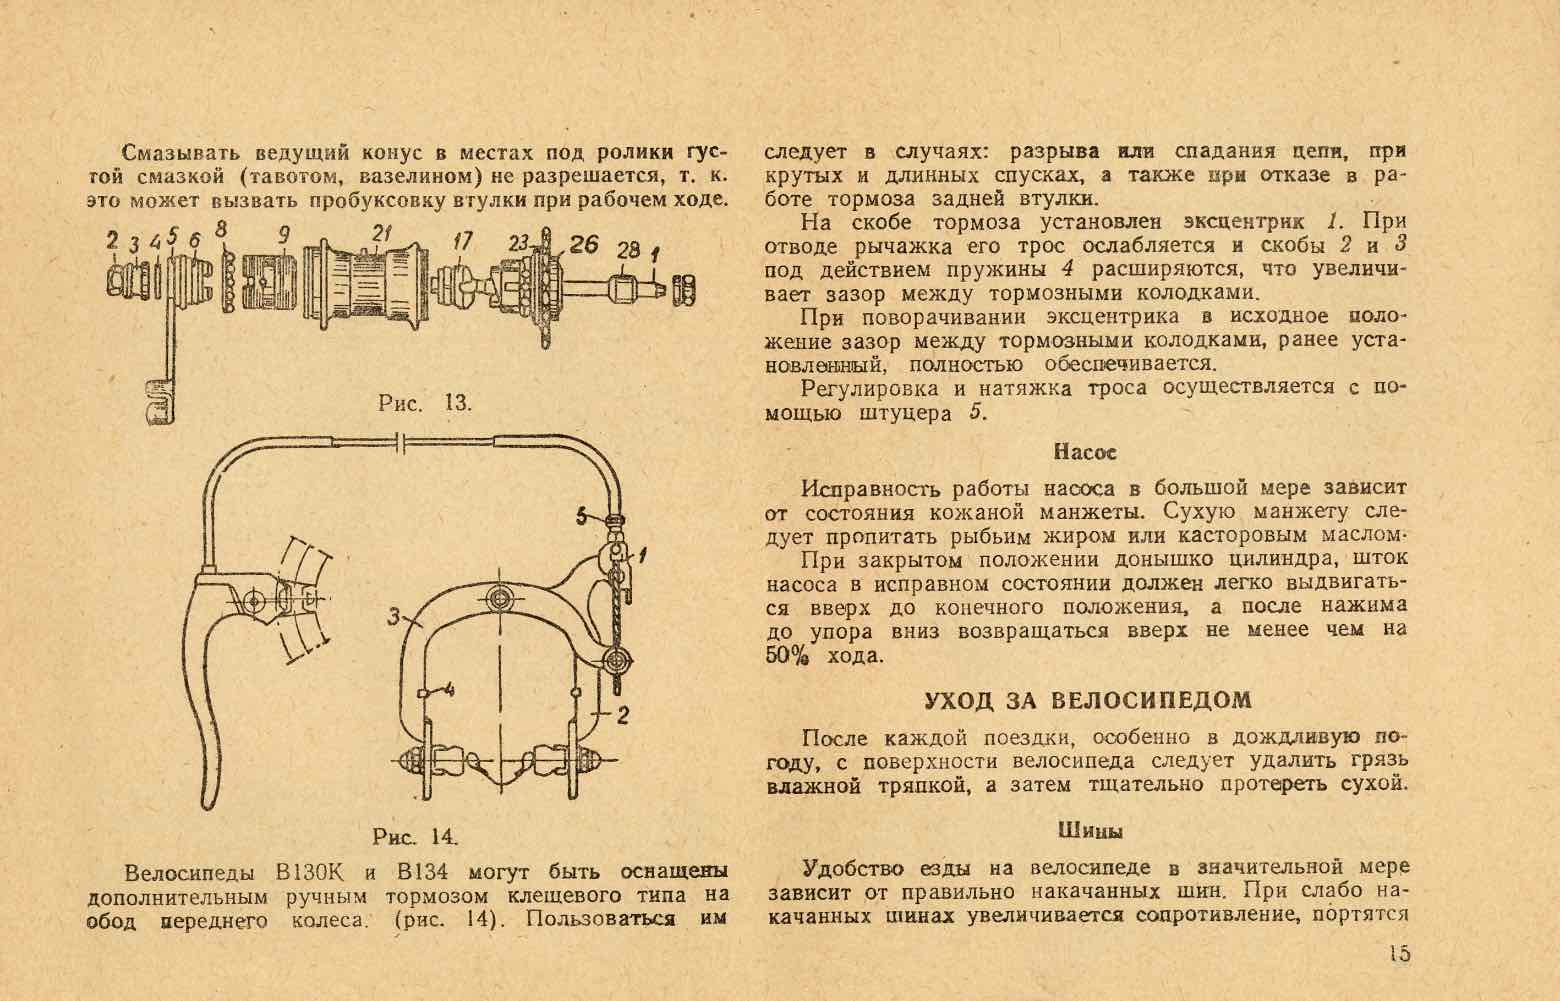 Kharkov - instructions for B130K & B134 - page 15 main image